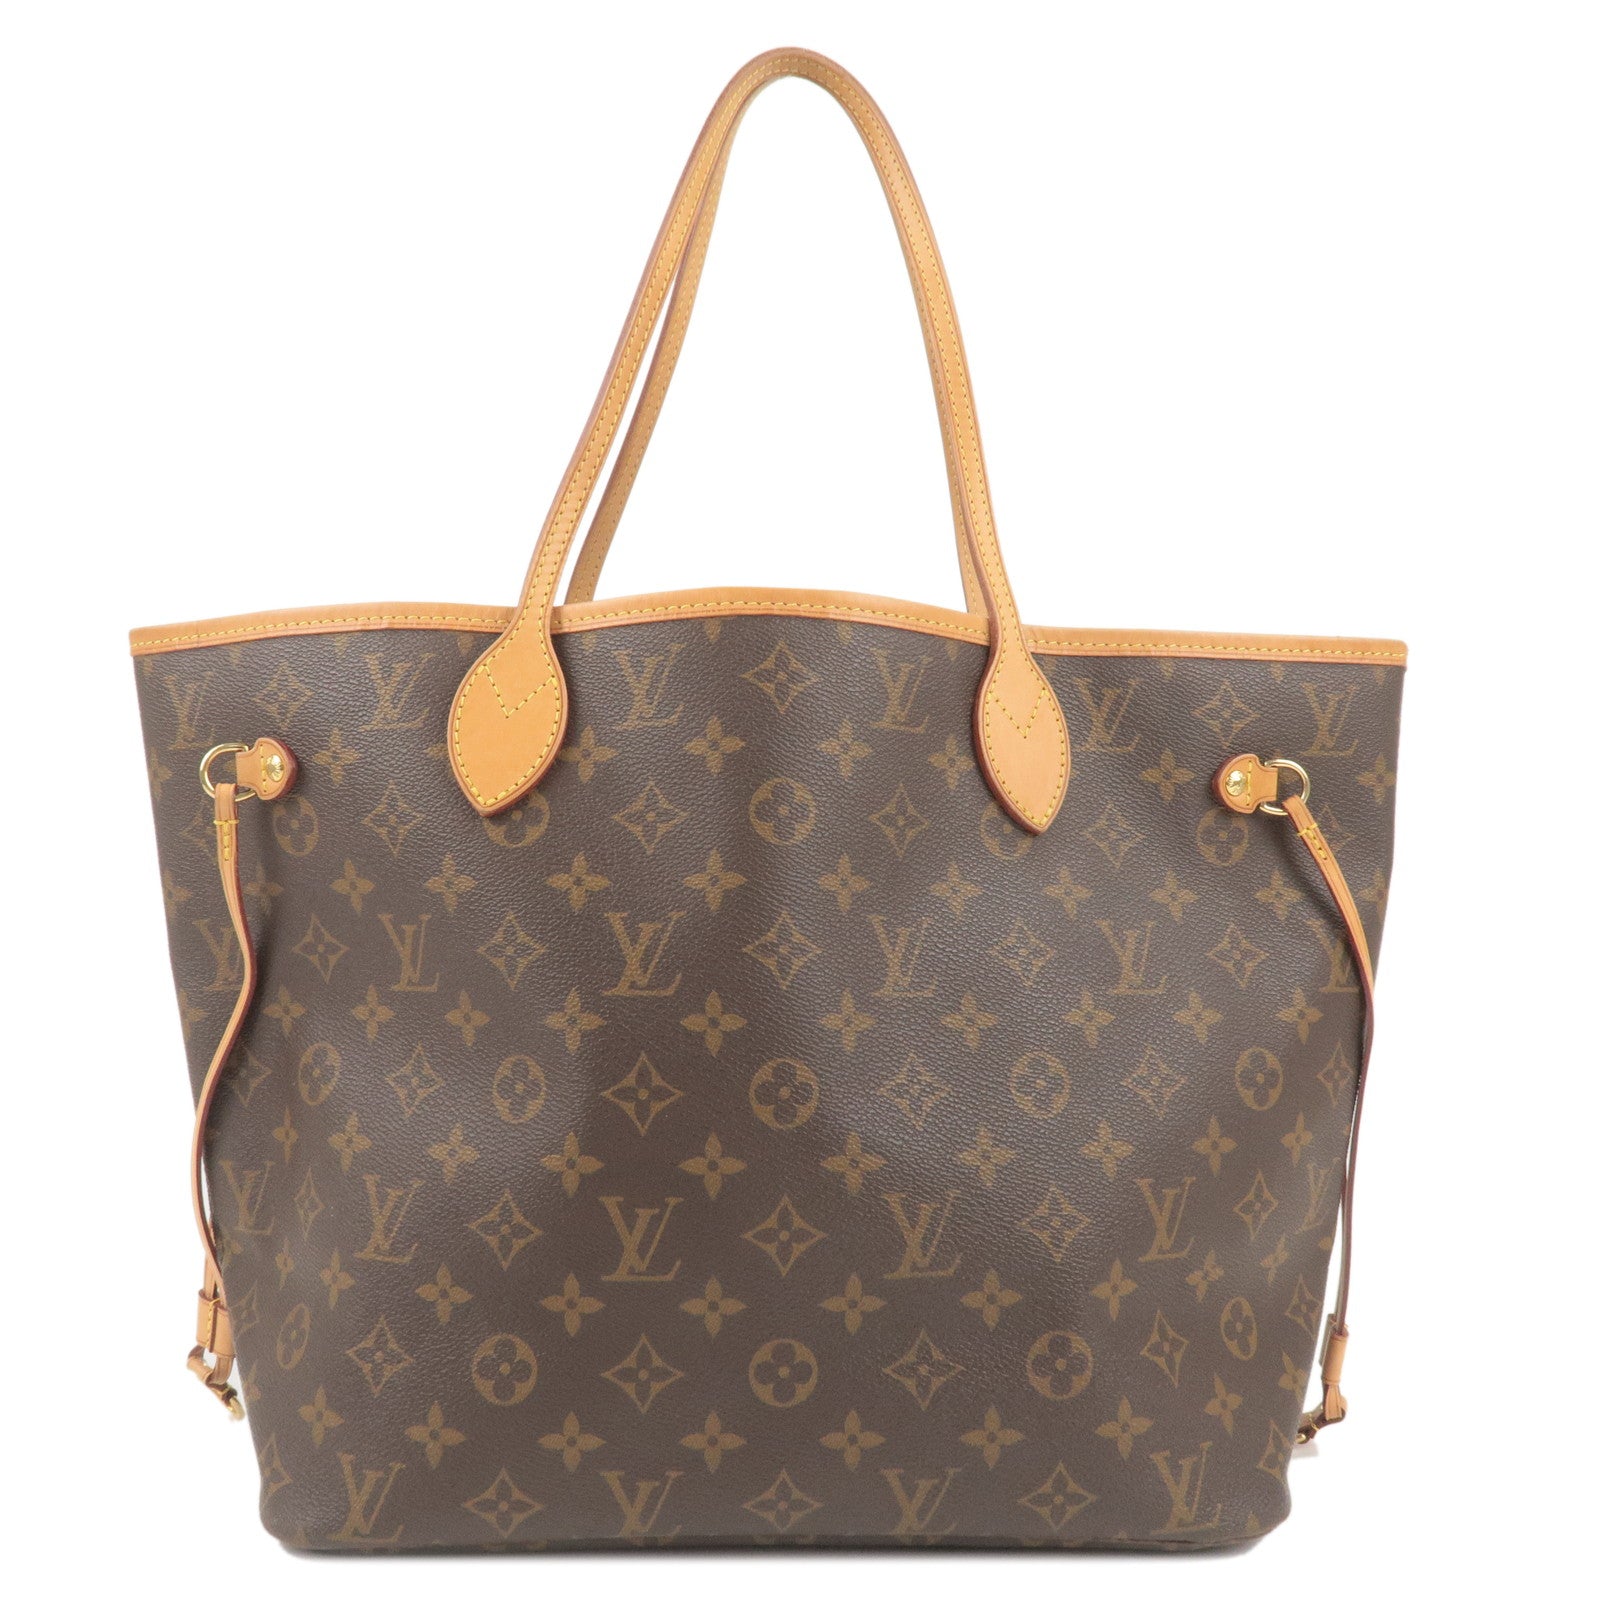 Louis Vuitton - Neverfull mm - Monogram Leather - Black / Beige - Women - Handbag - Luxury